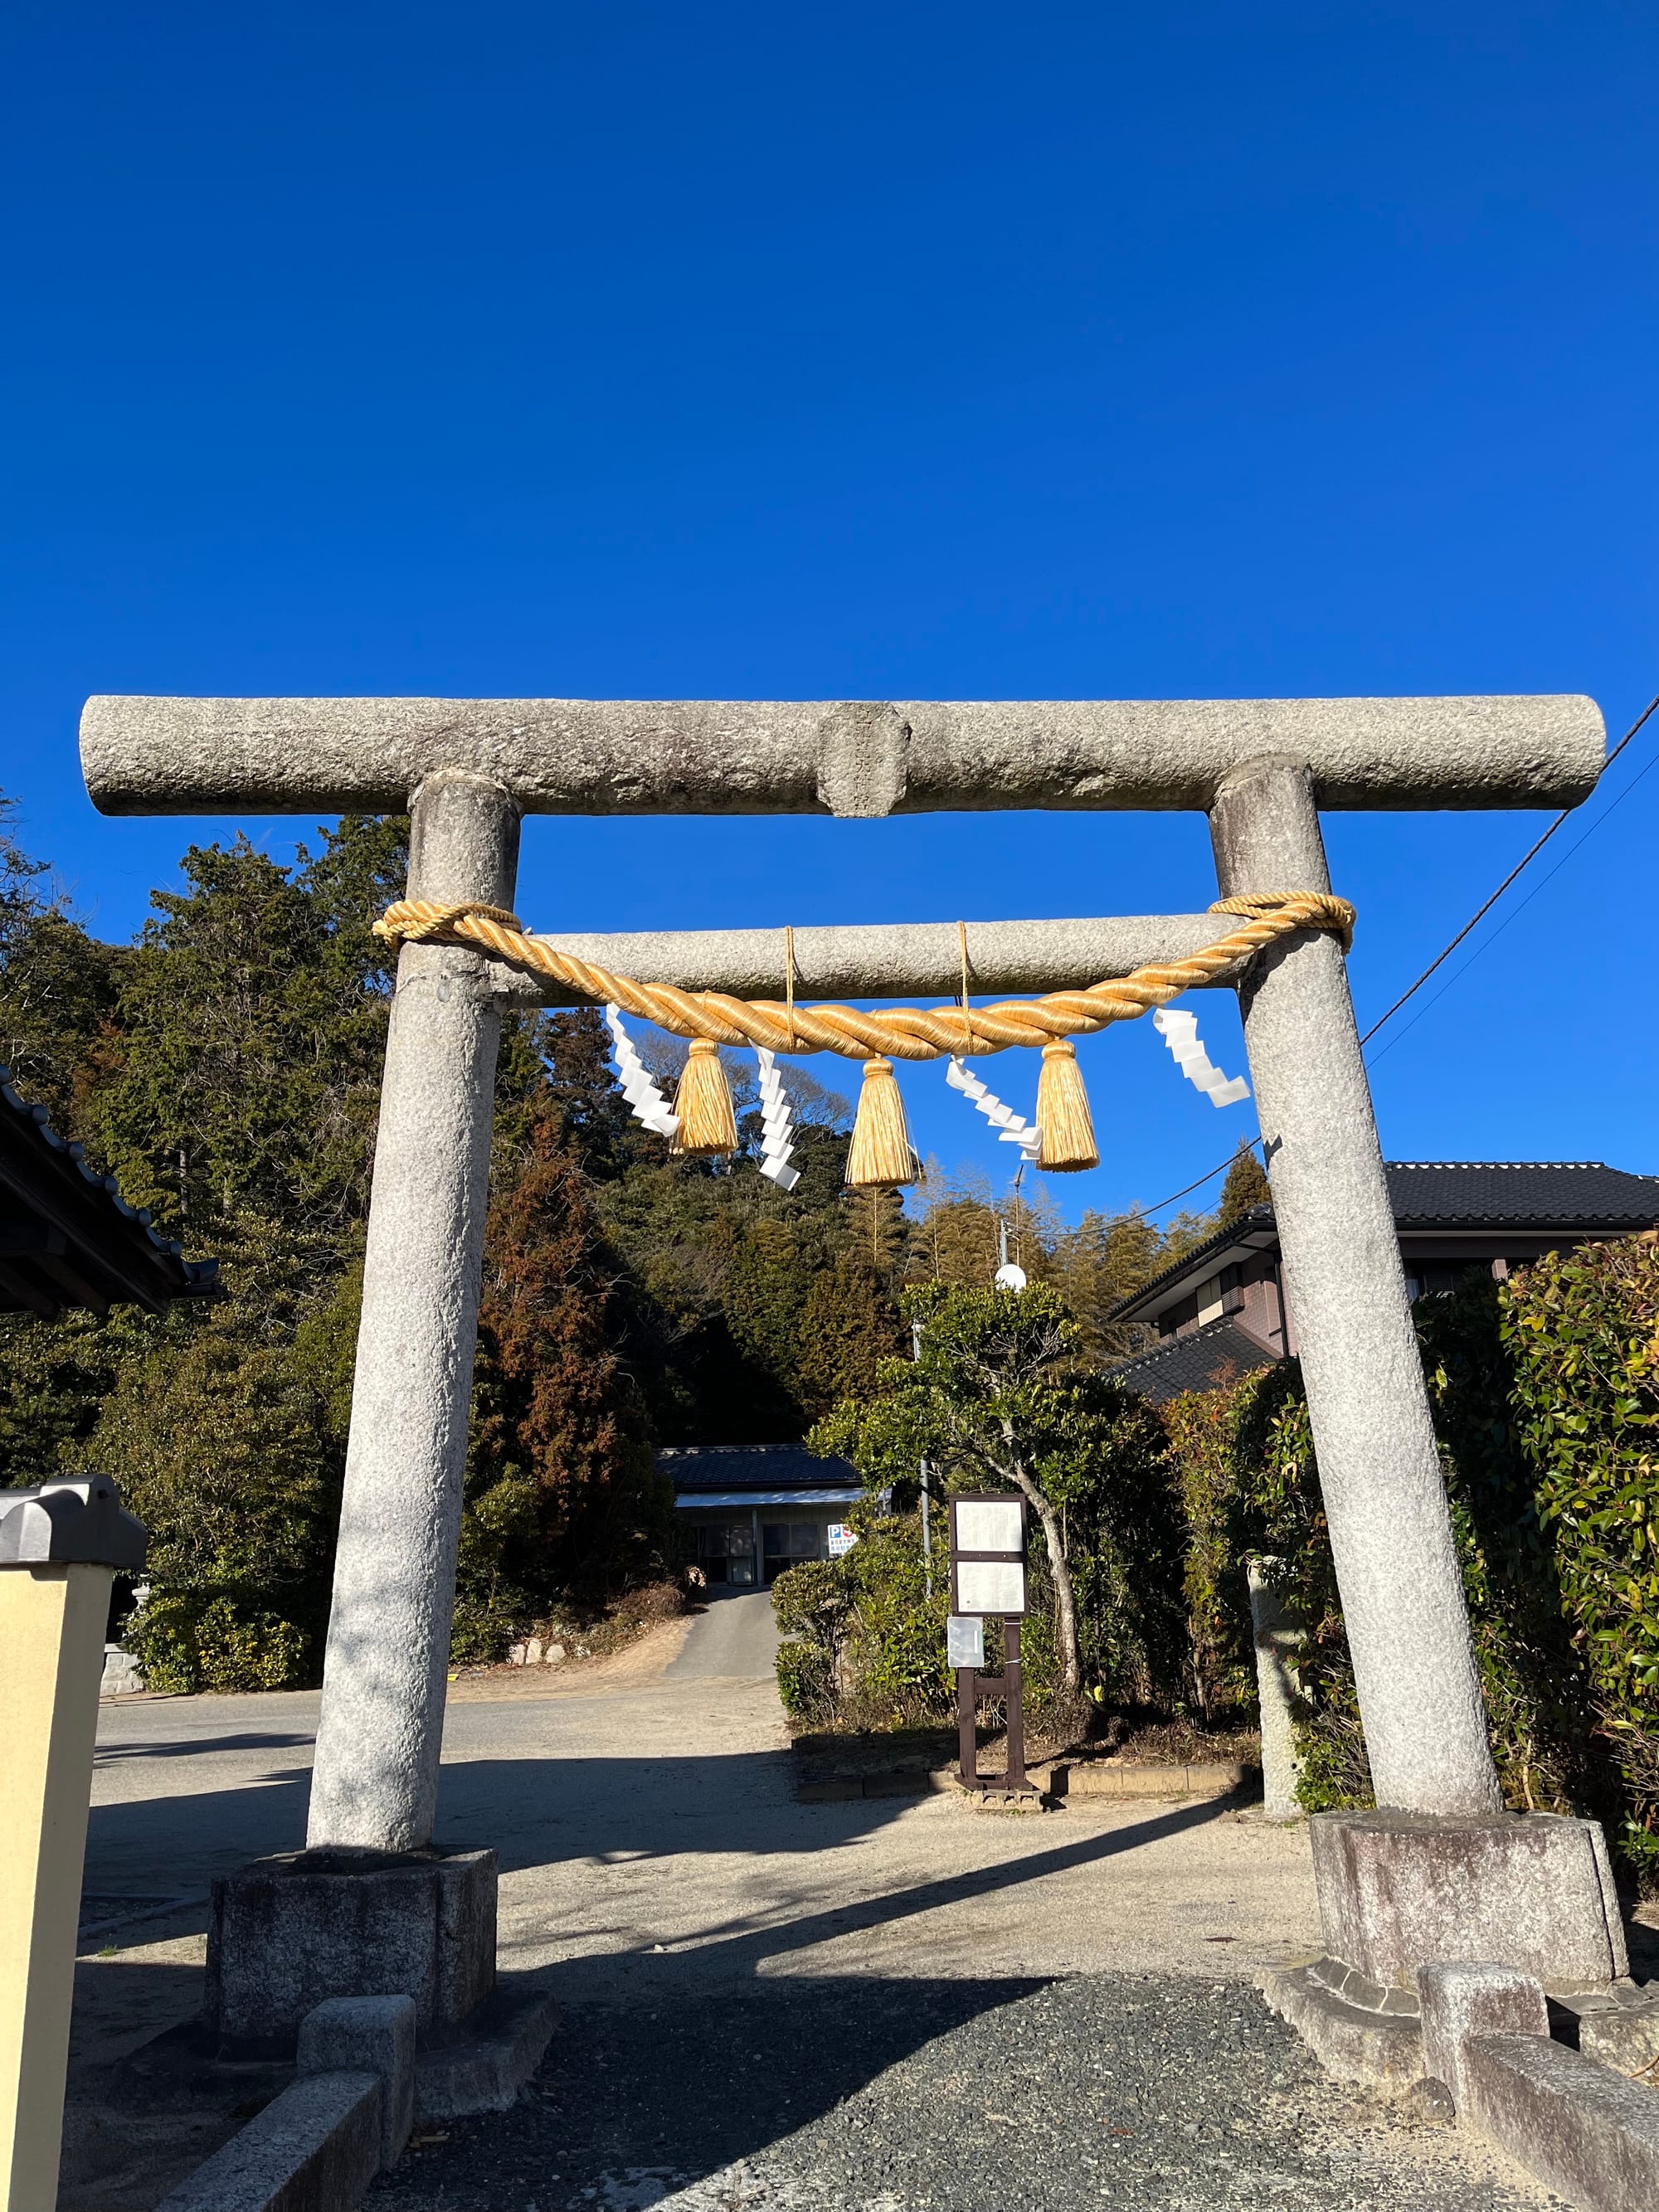 Koso Kotai Shrine and the Takenouchi Documents